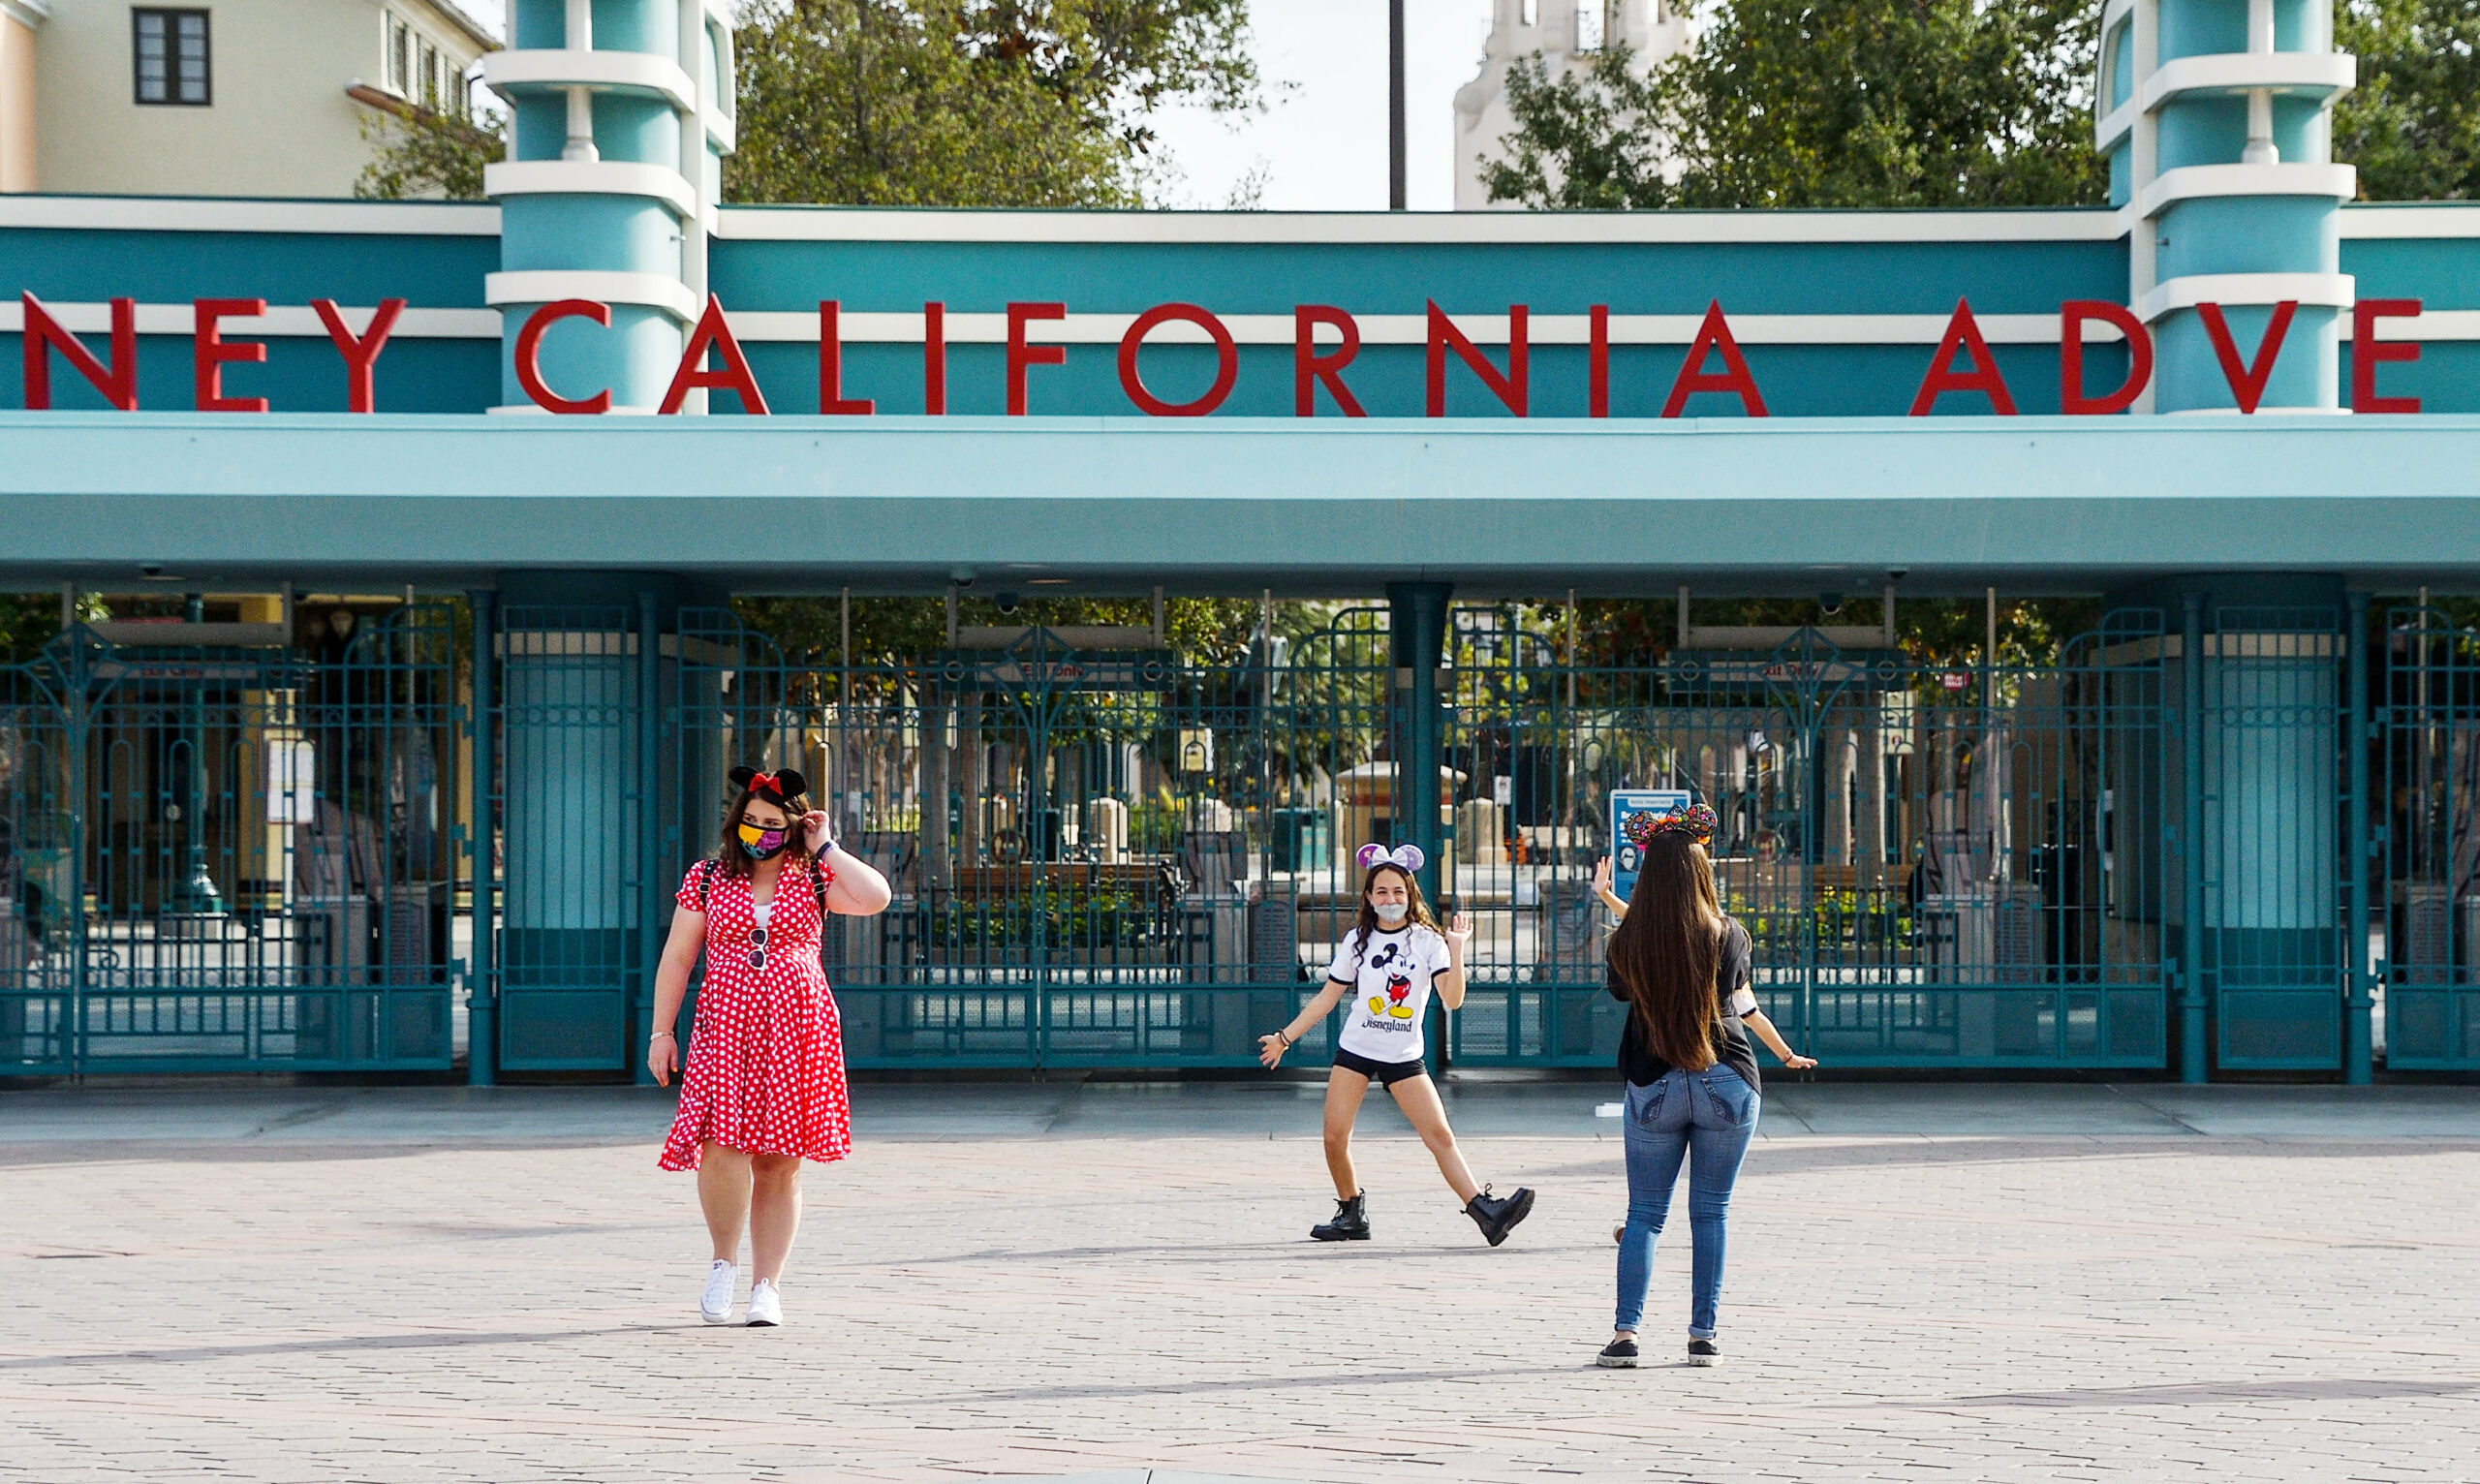 Disneyland to reopen on April 30, Disney CEO Bob Chapek says